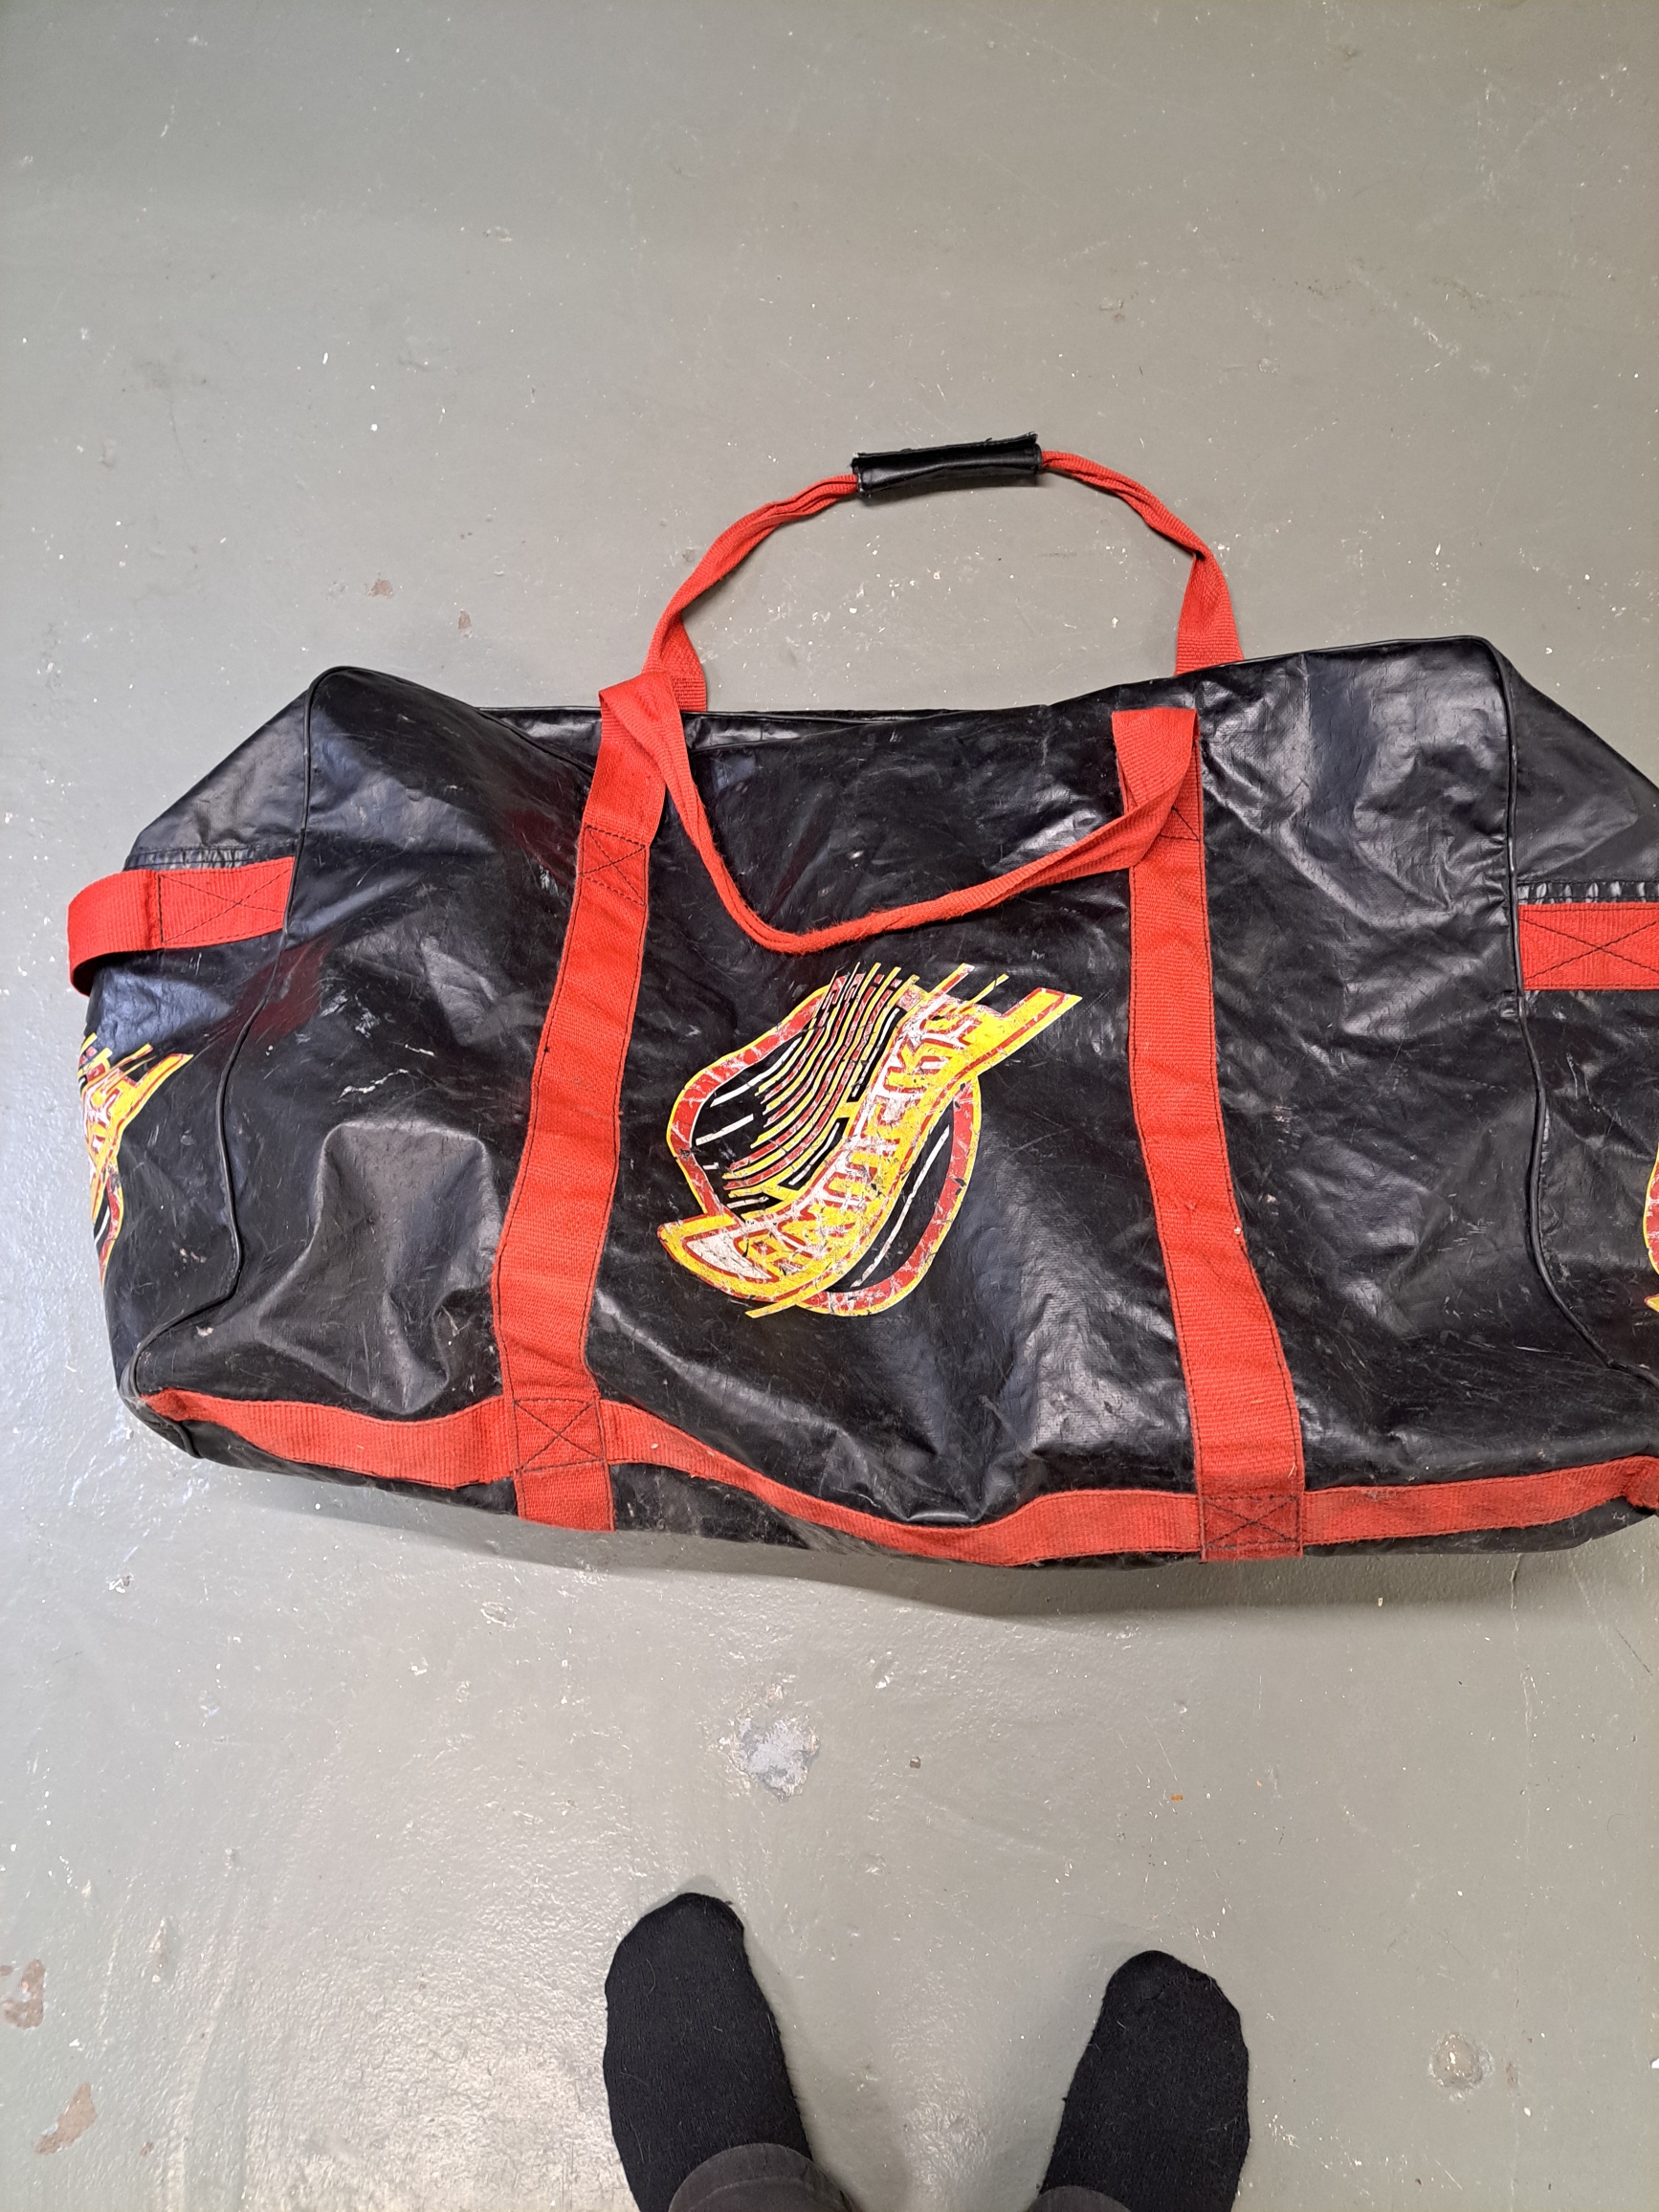 Vancouver Canucks (Skate) Package...(Player Bag, Shave Bag, Soakers)